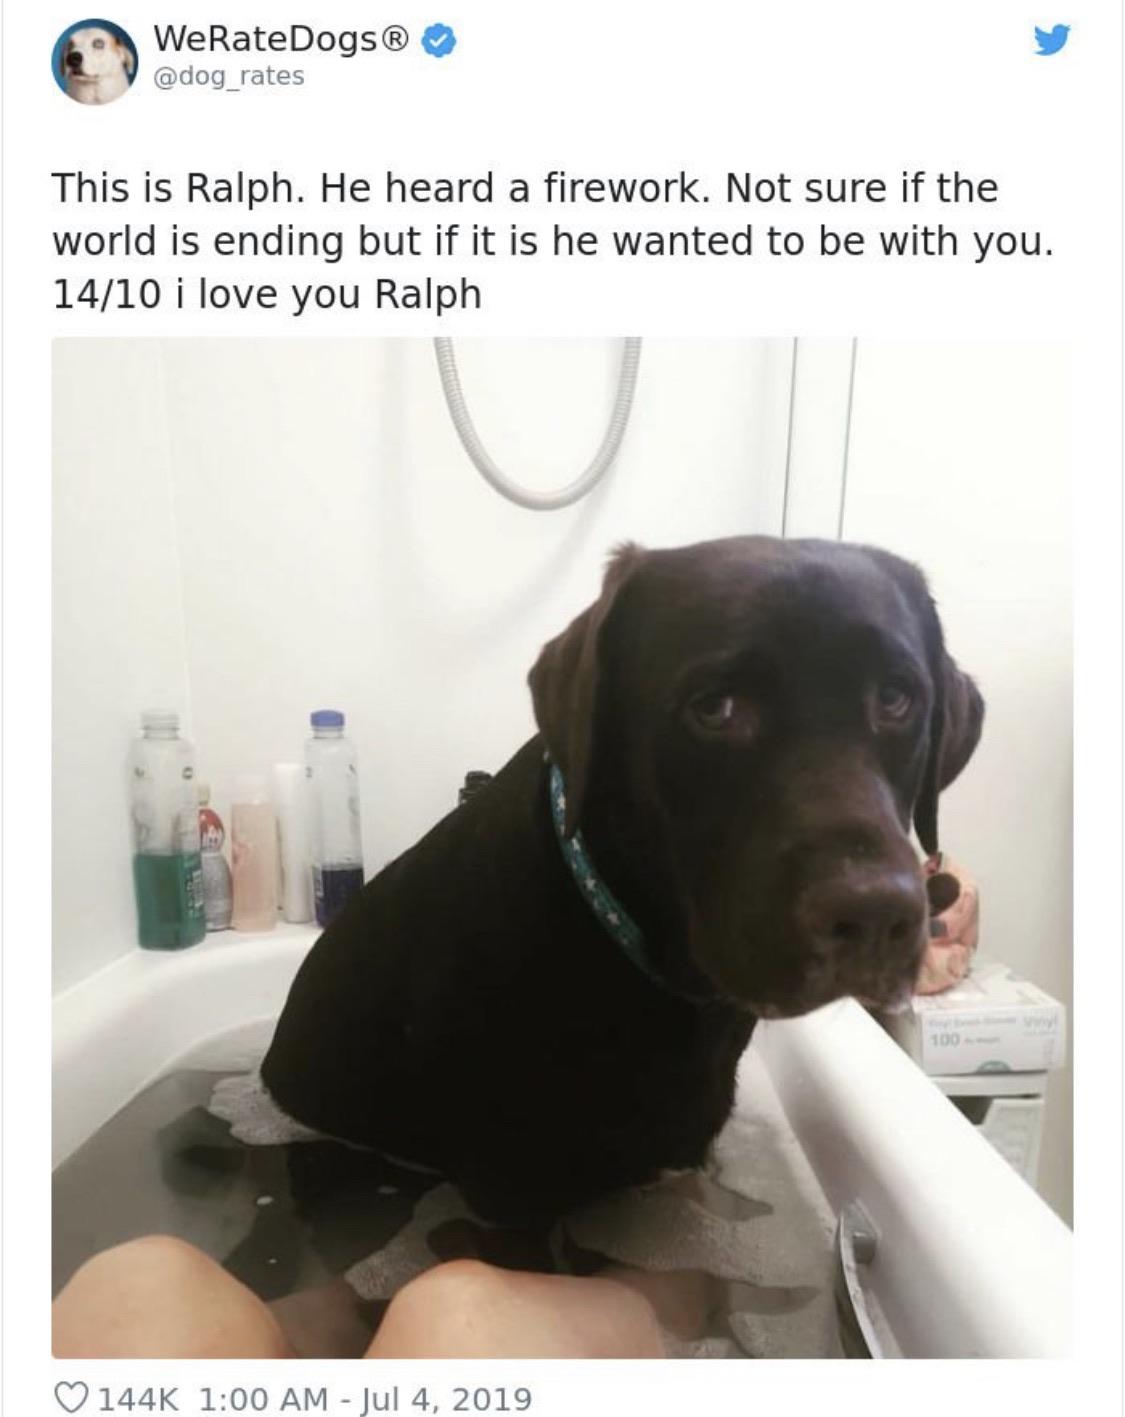 It's gonna be OK, Ralphie.